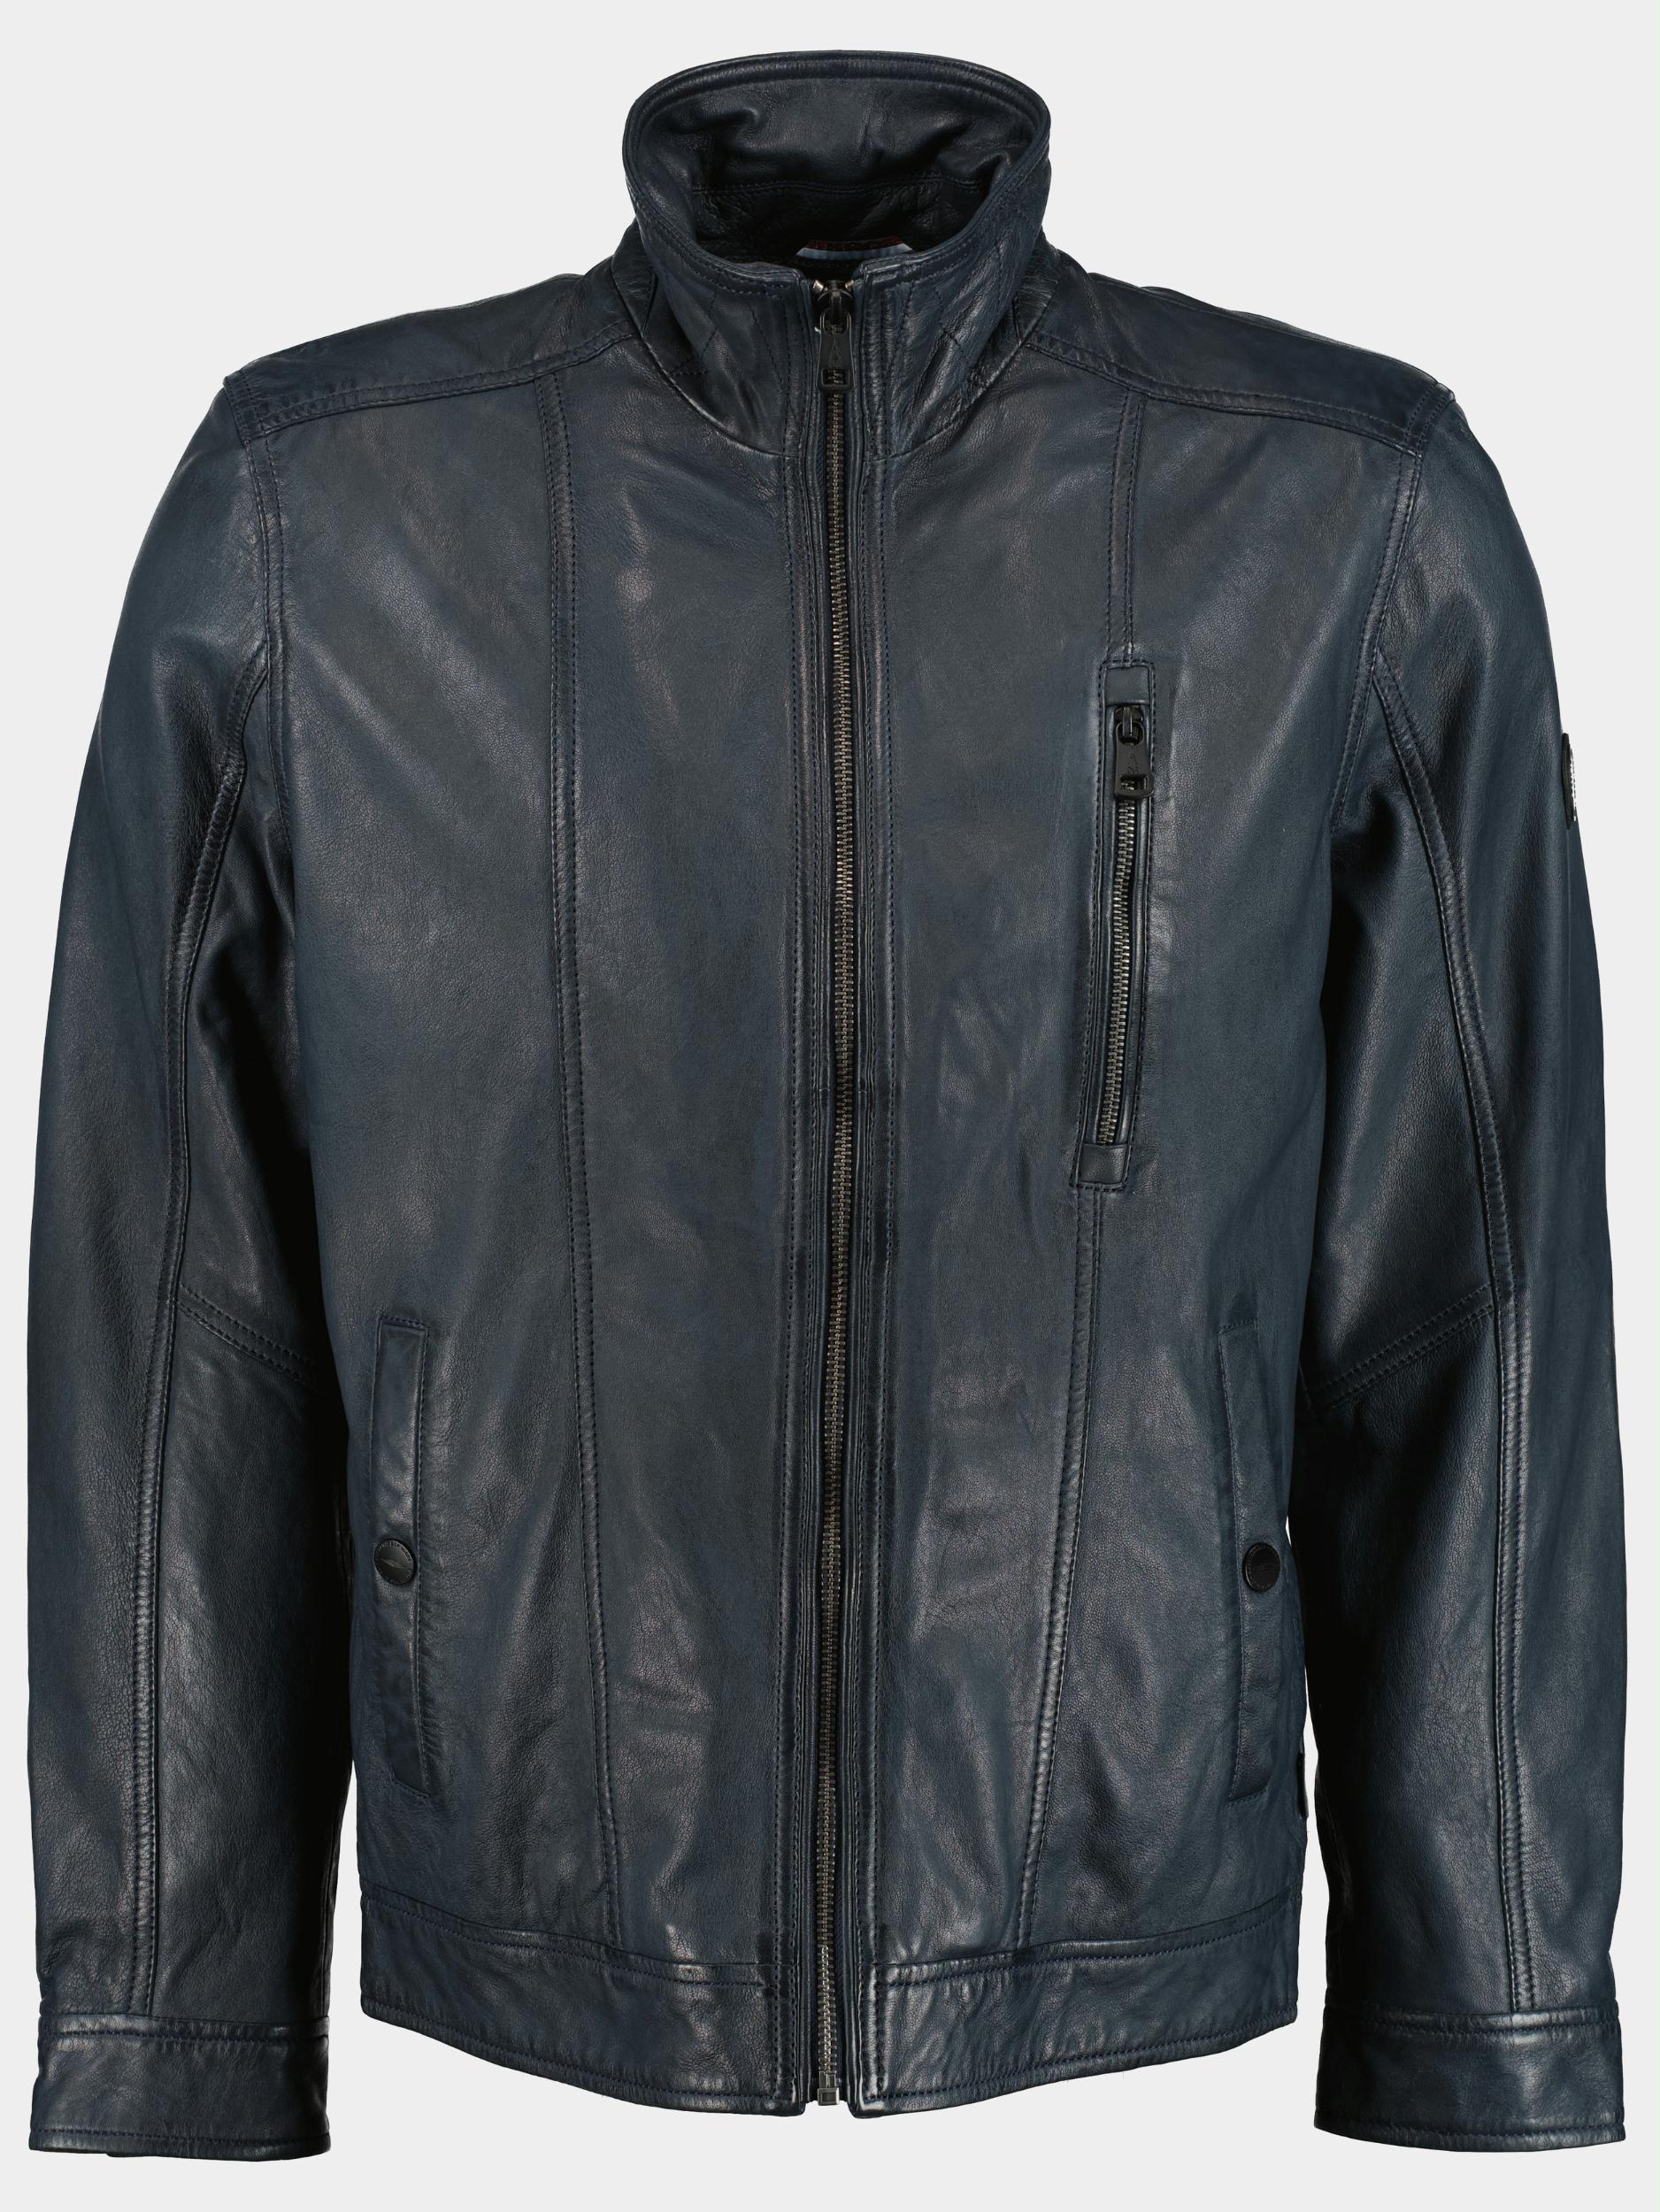 DNR Lederen jack Blauw Leather Jacket 52349/799